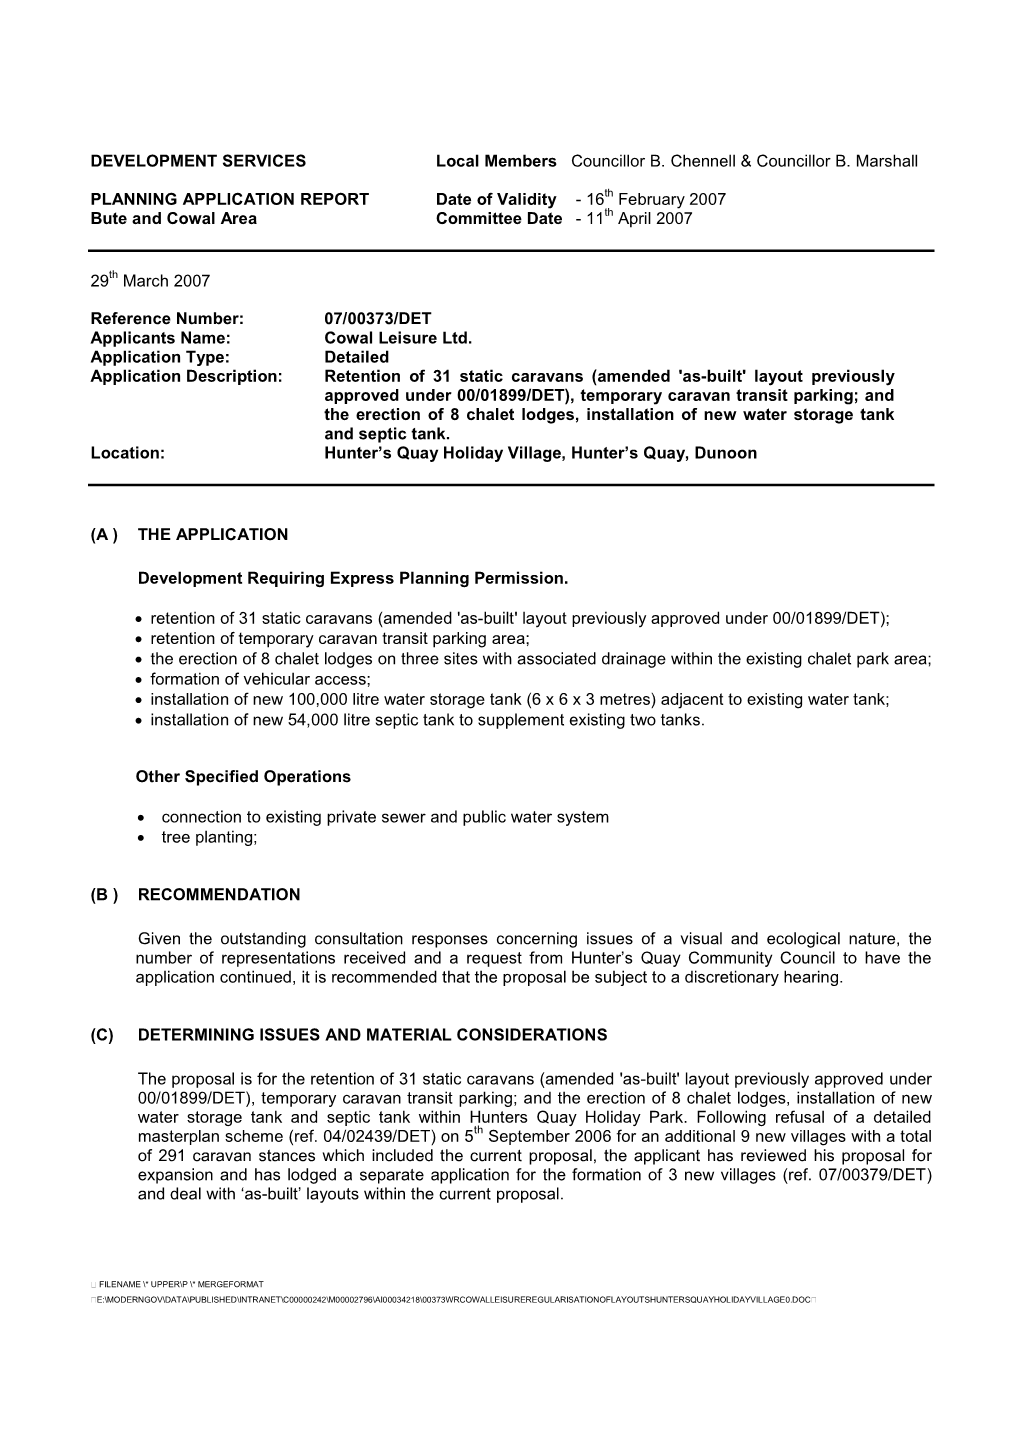 Planning Application 07/00373/DET, Cowal Leisure Ltd, Hunter's Quay